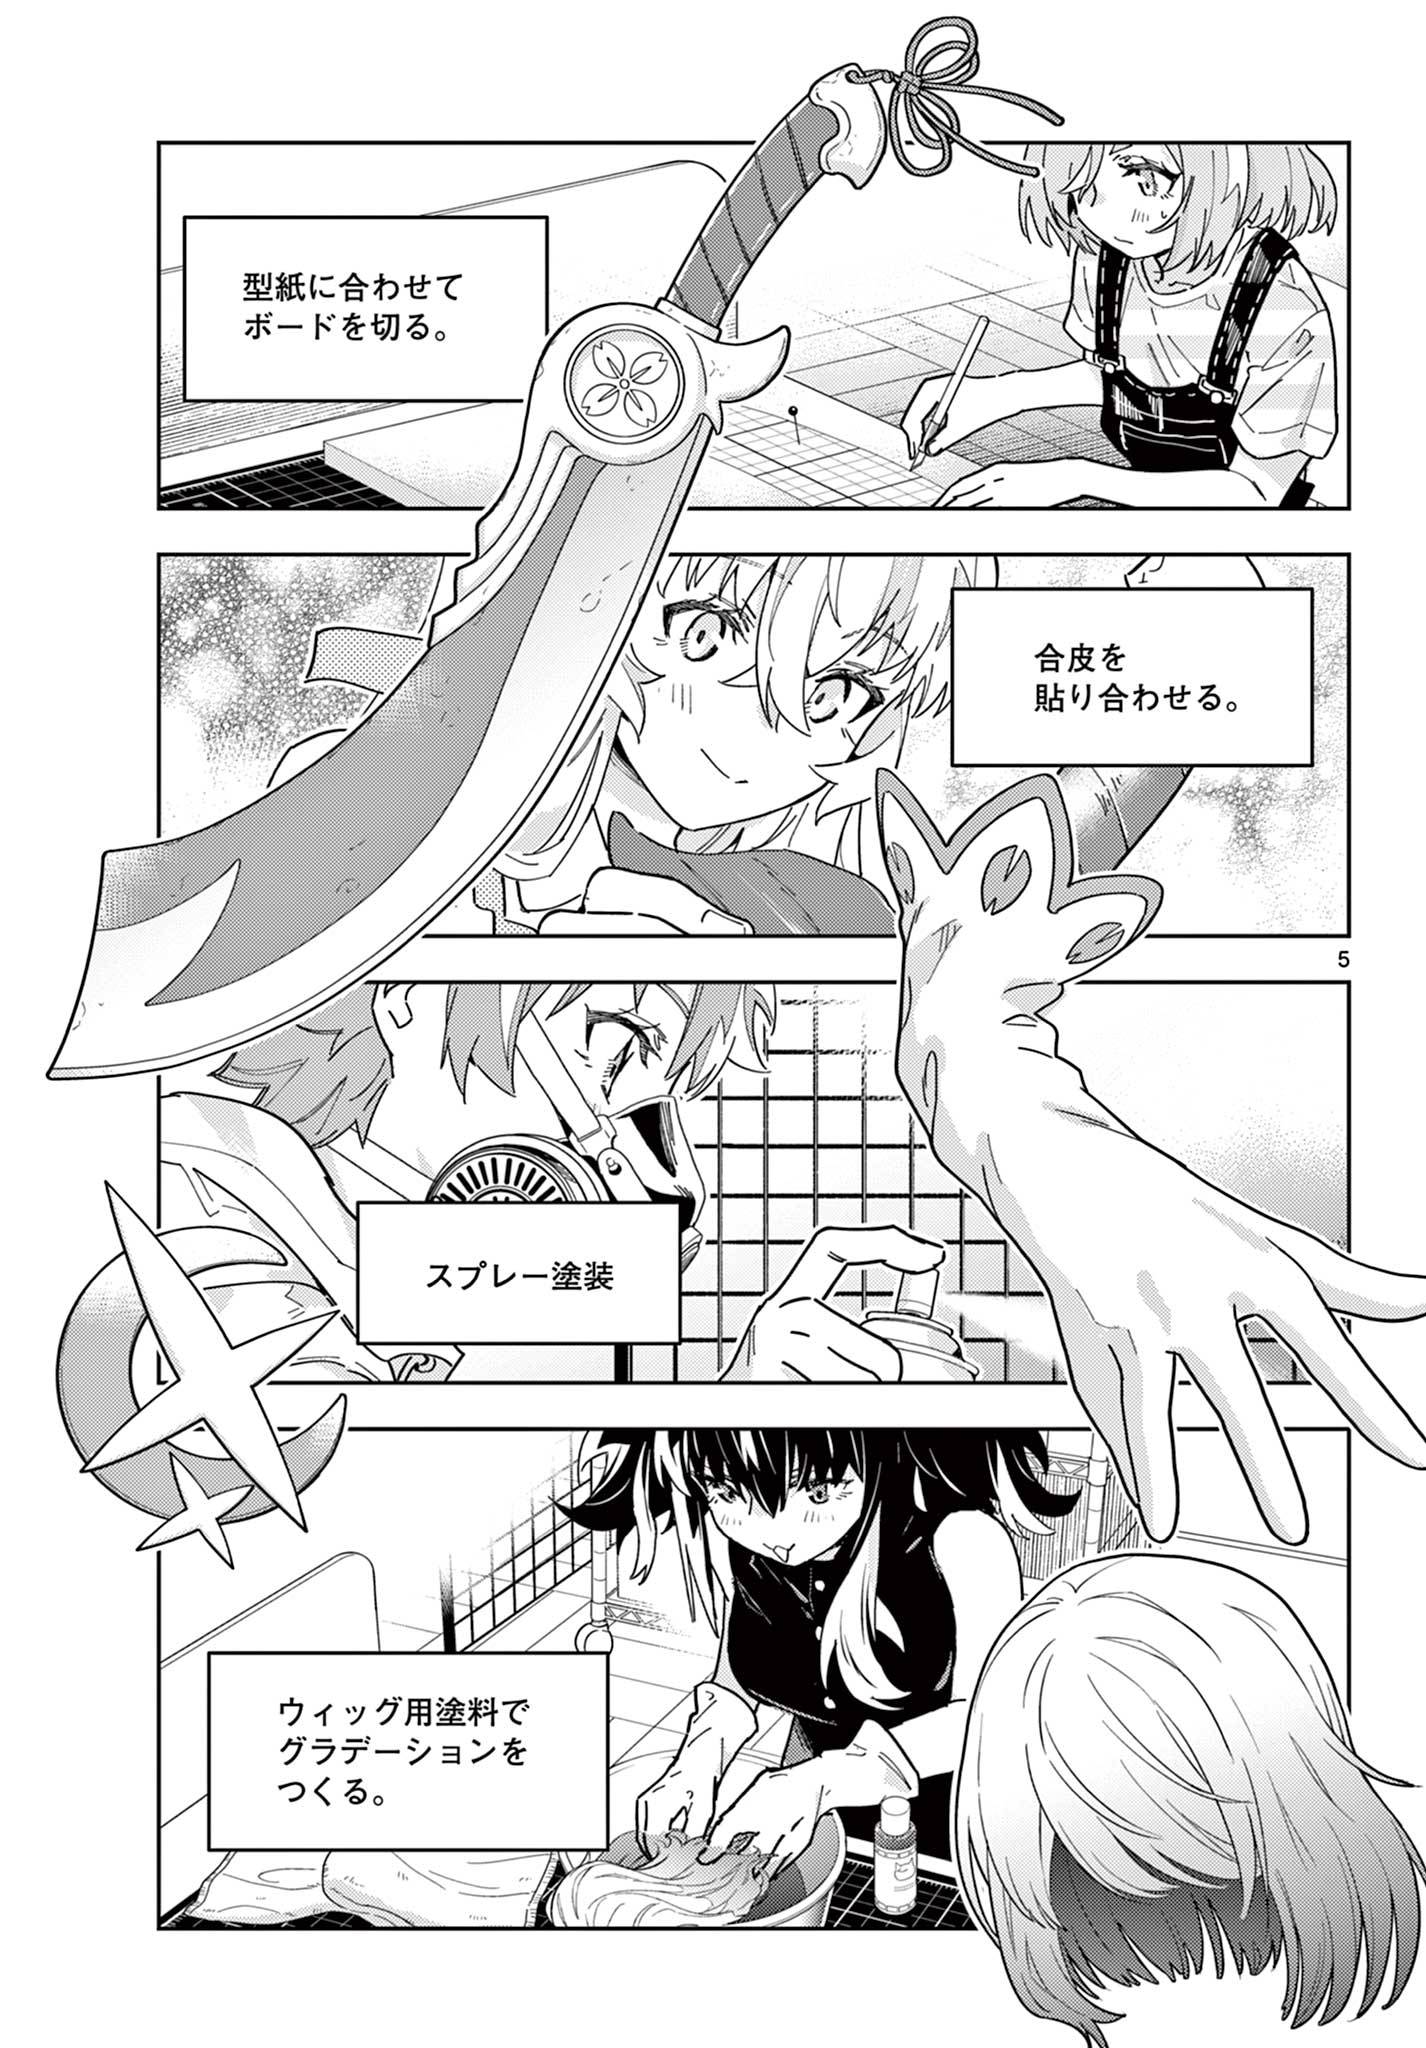 Gareki! Modeller Girls no Houkago - Chapter 18.5 - Page 5